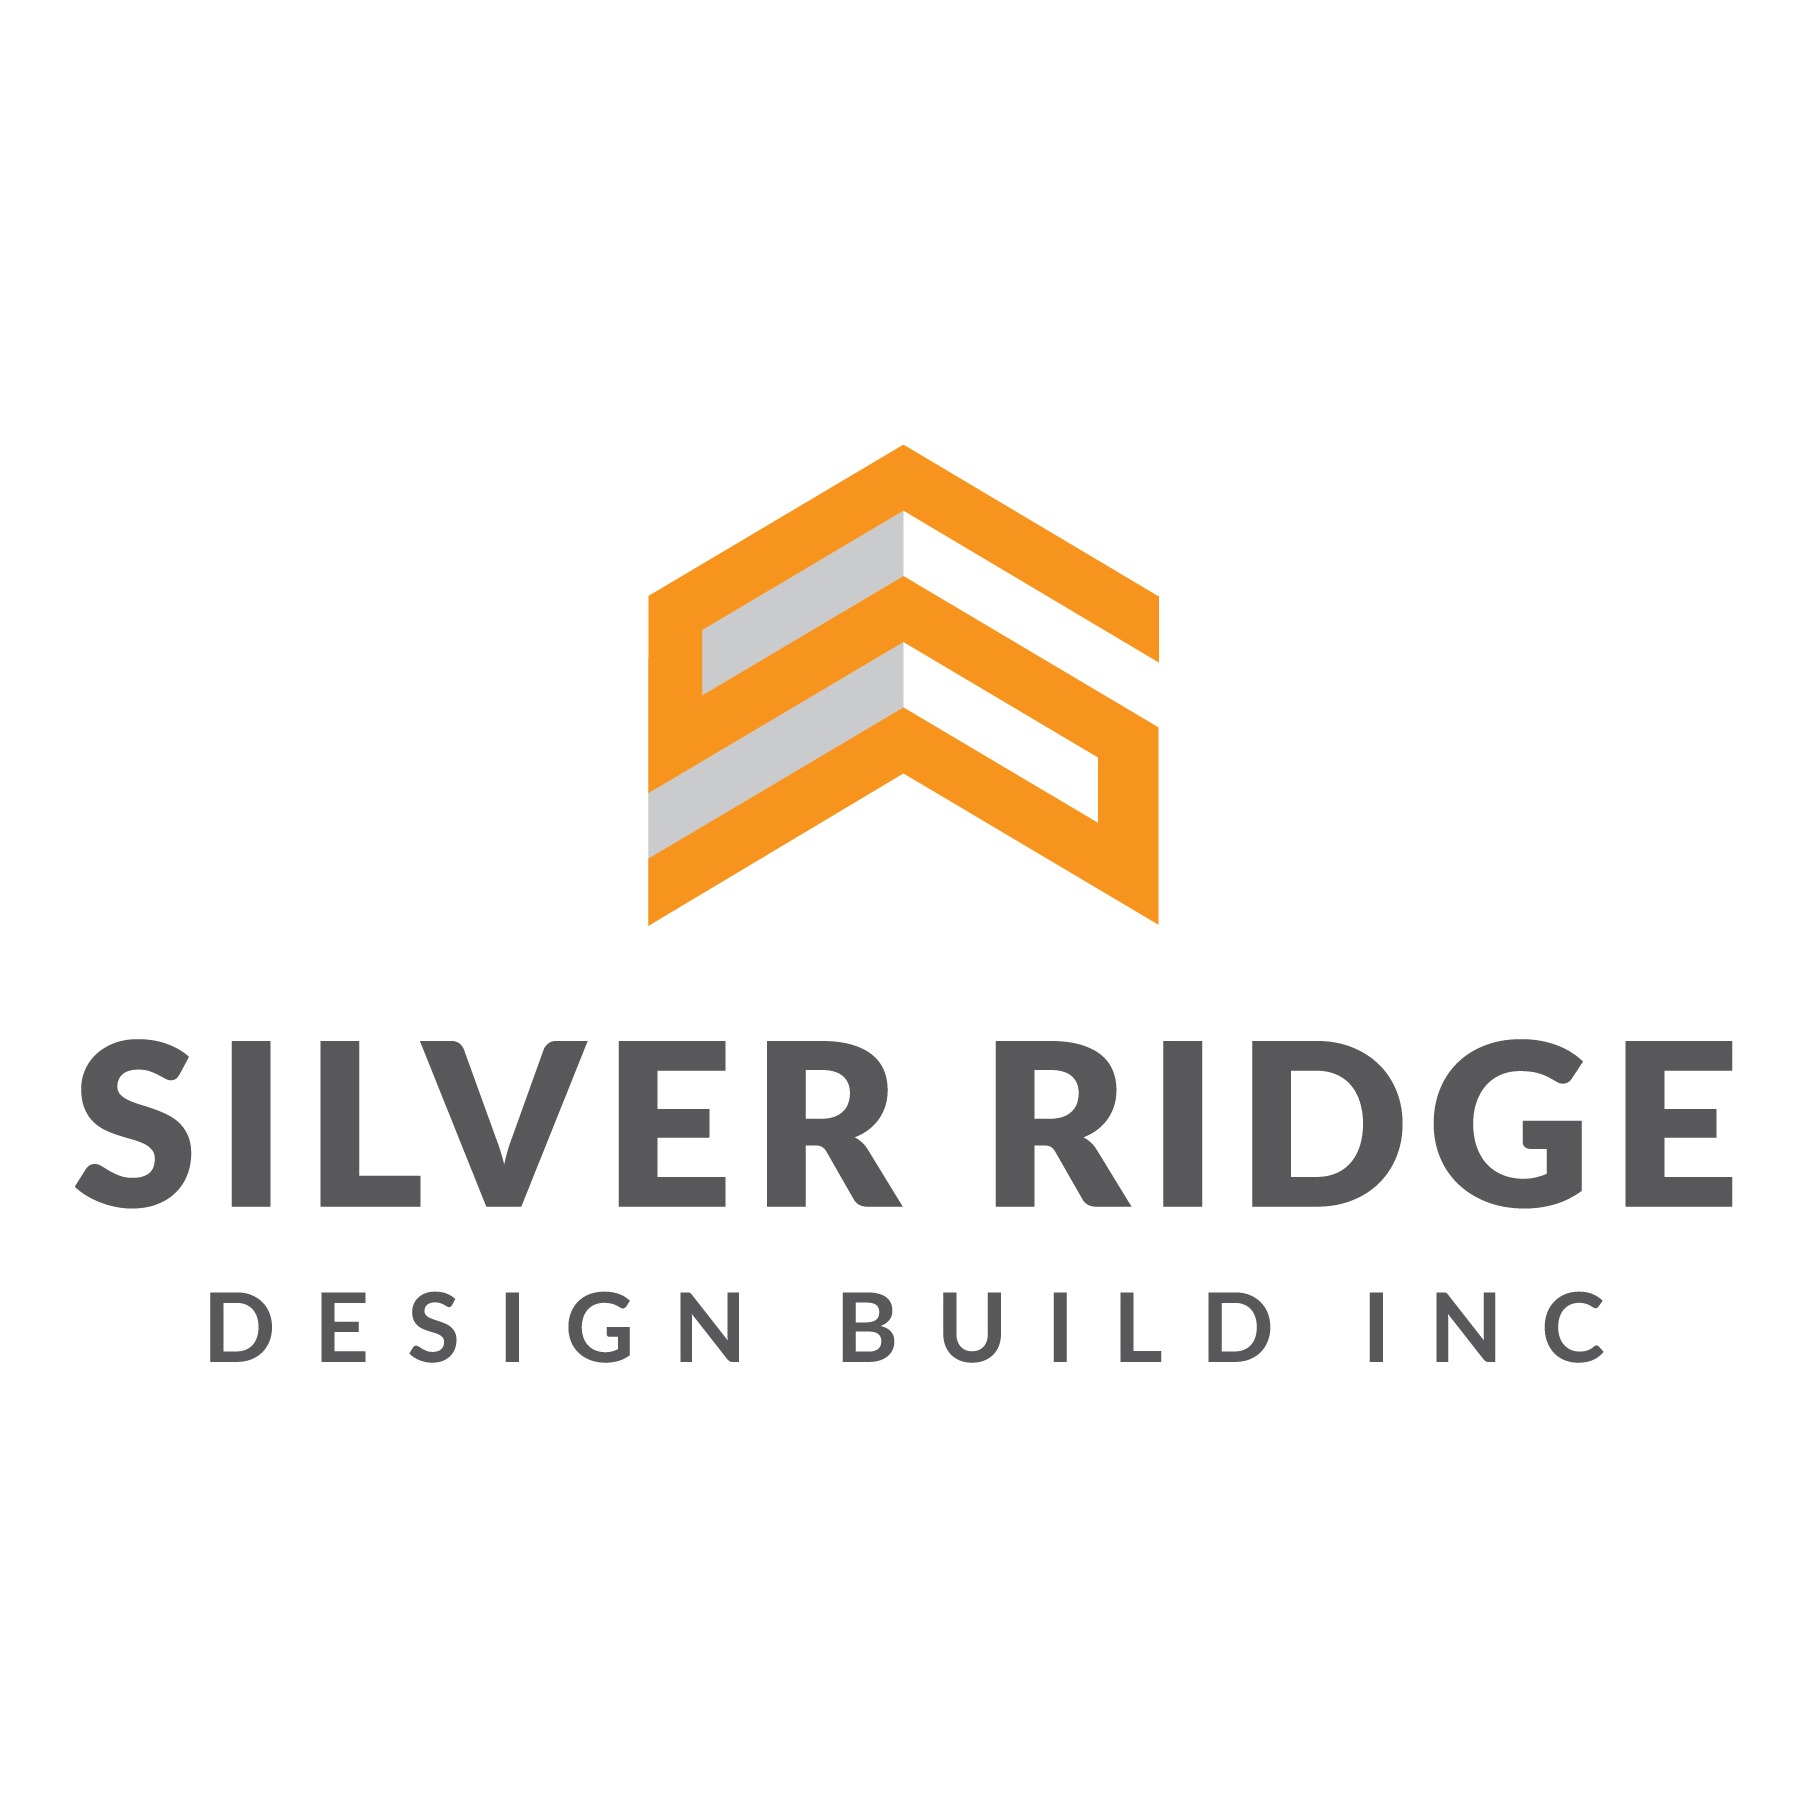 Silver Ridge Design Build Inc.